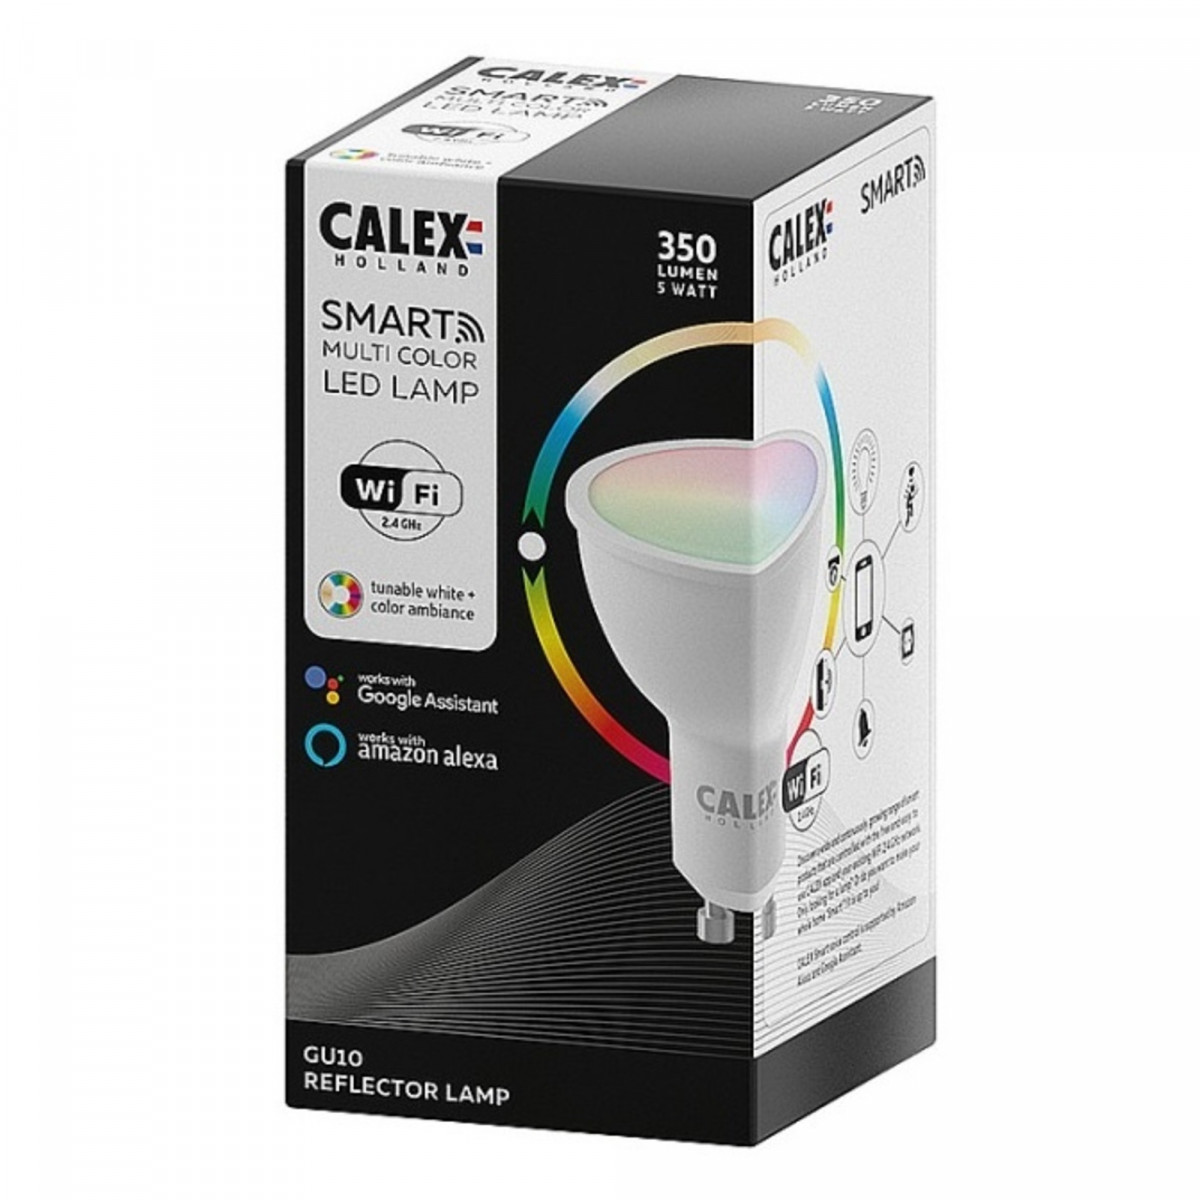 Calex Smart Reflektor LED-Spot GU10 5W 350lm 4000K-2200K